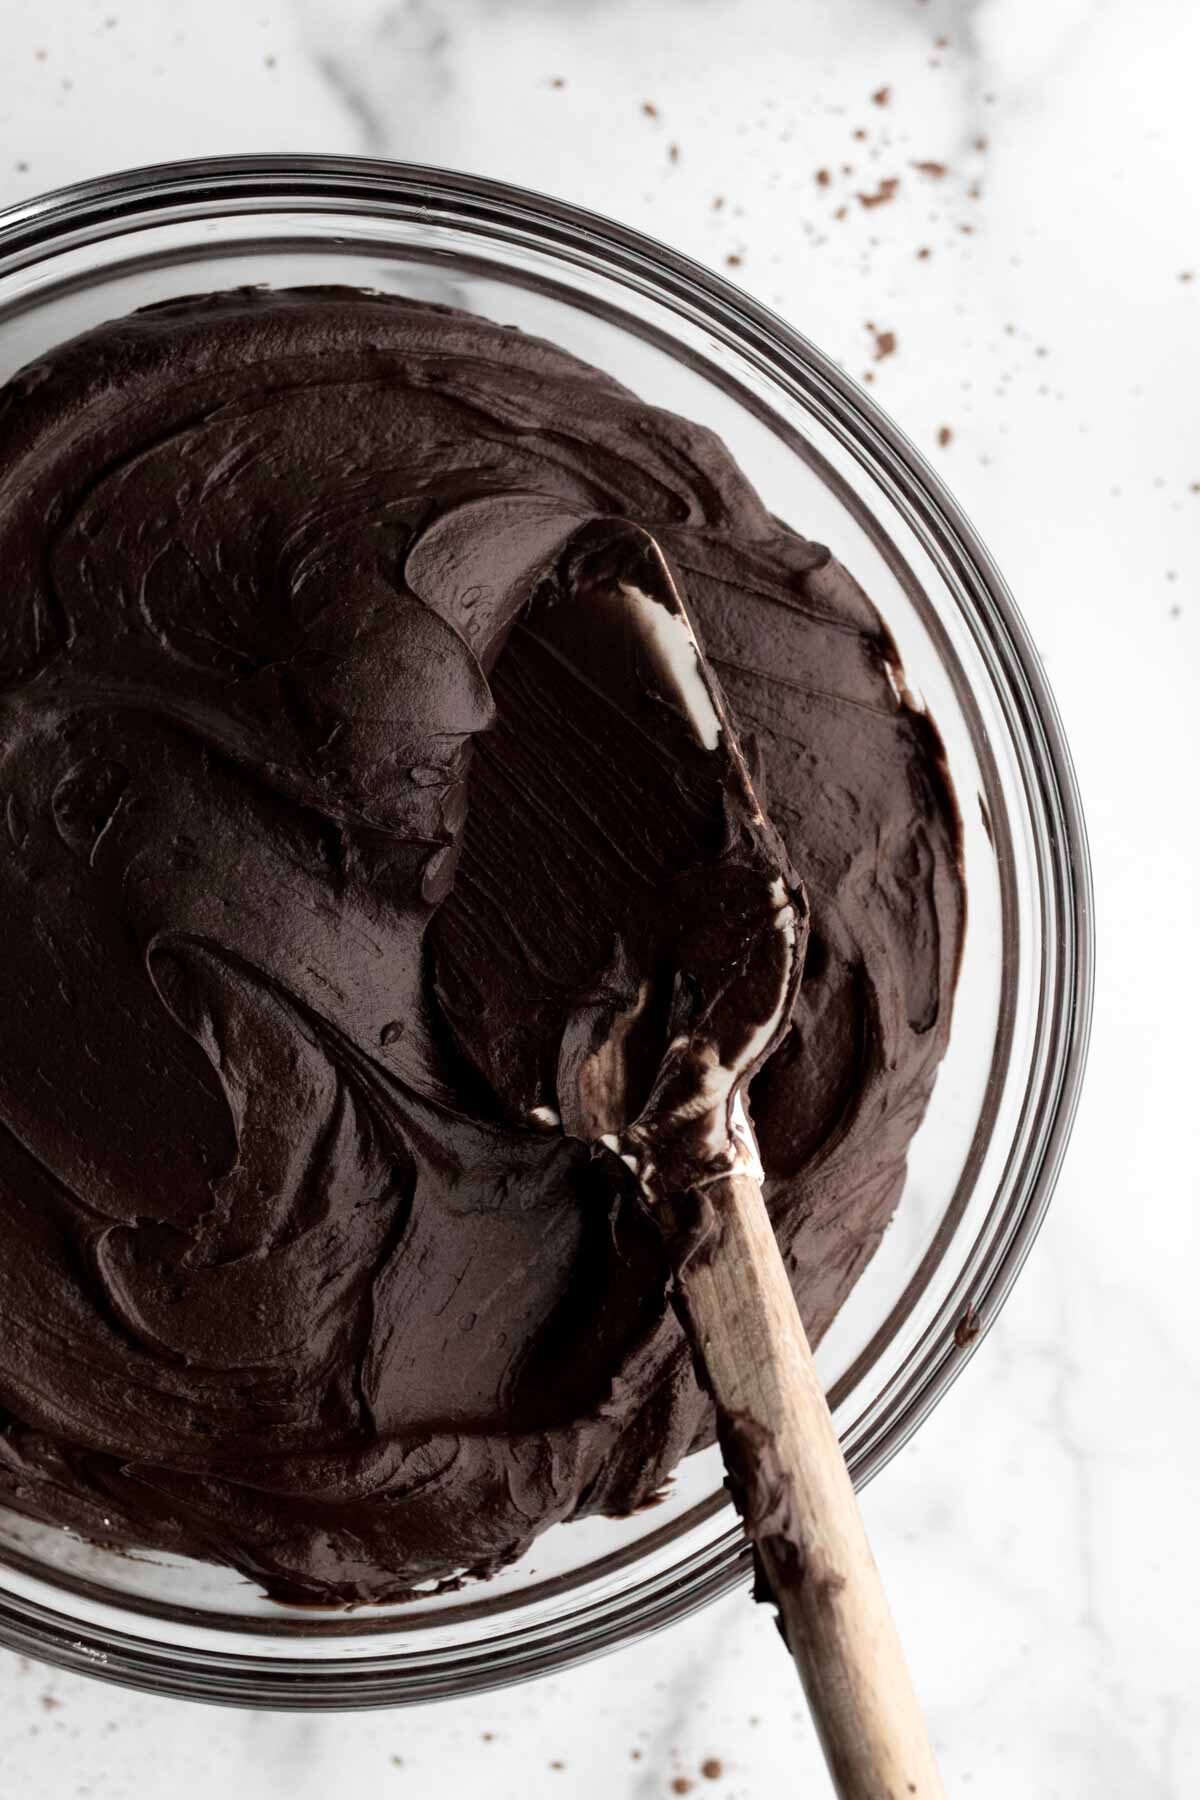 Creamy, dark and delicious chocolate fudge frosting.